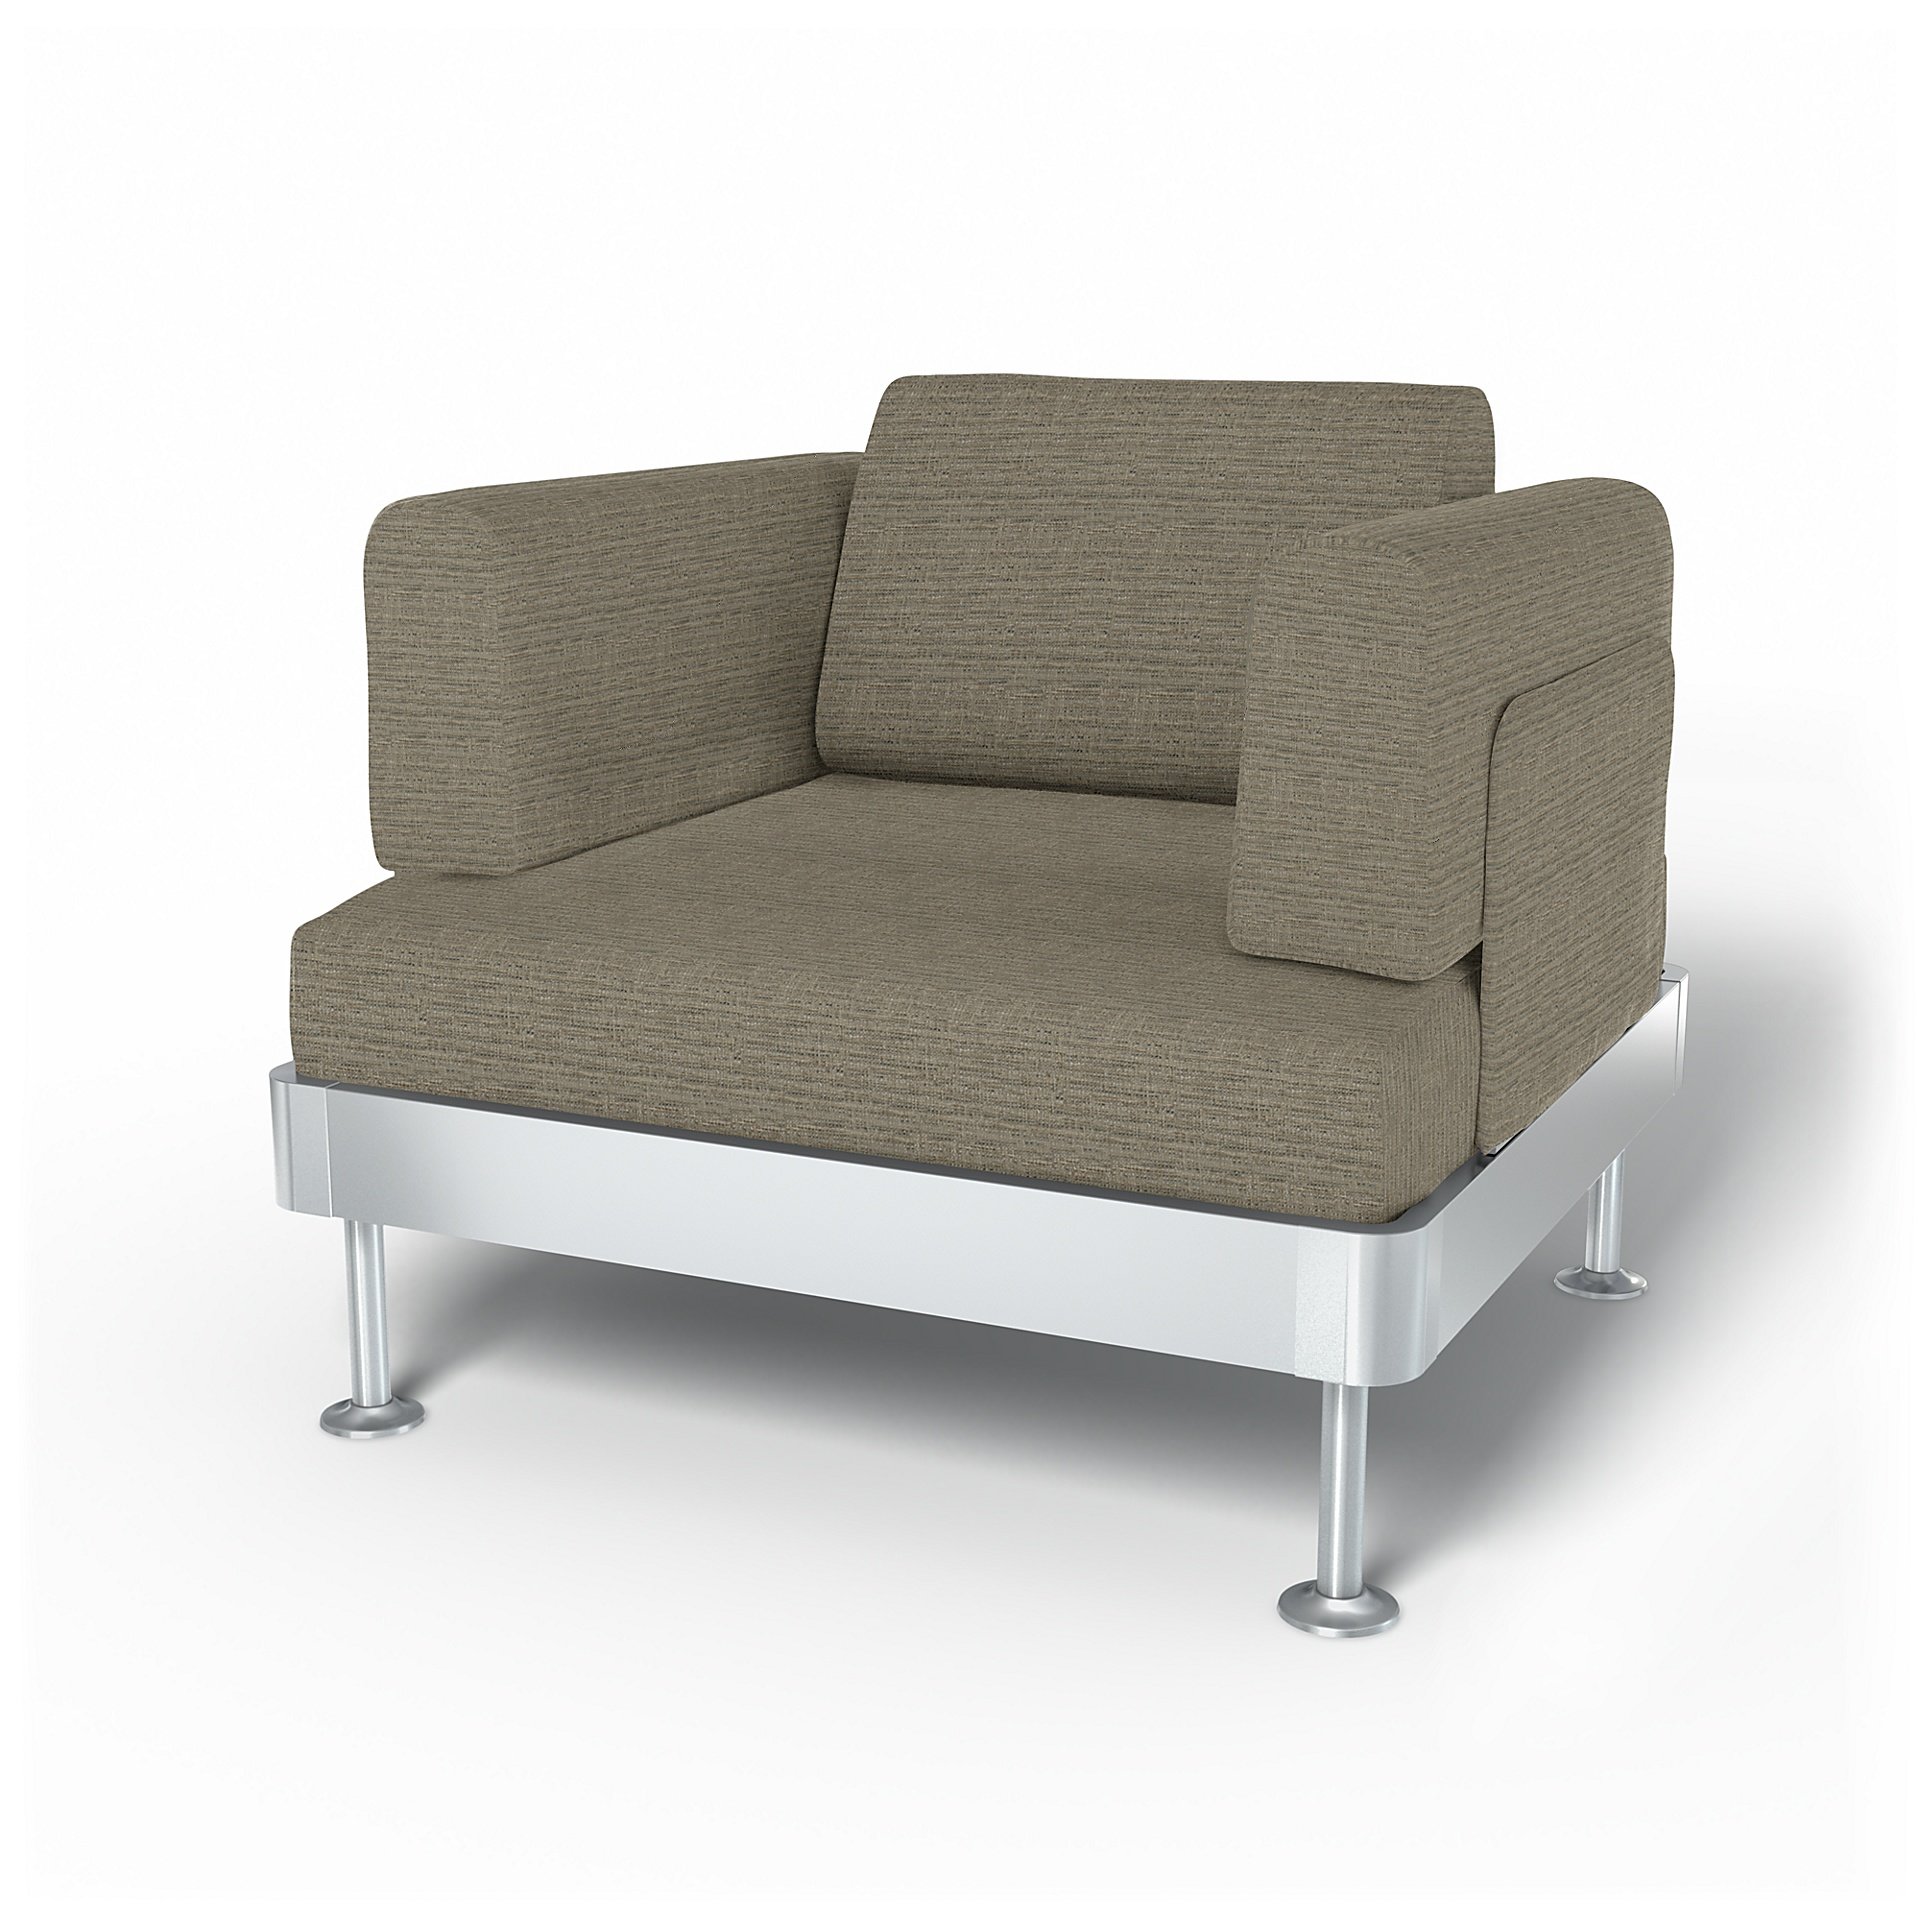 IKEA - Delaktig Armchair Cover, Mole Brown, Boucle & Texture - Bemz